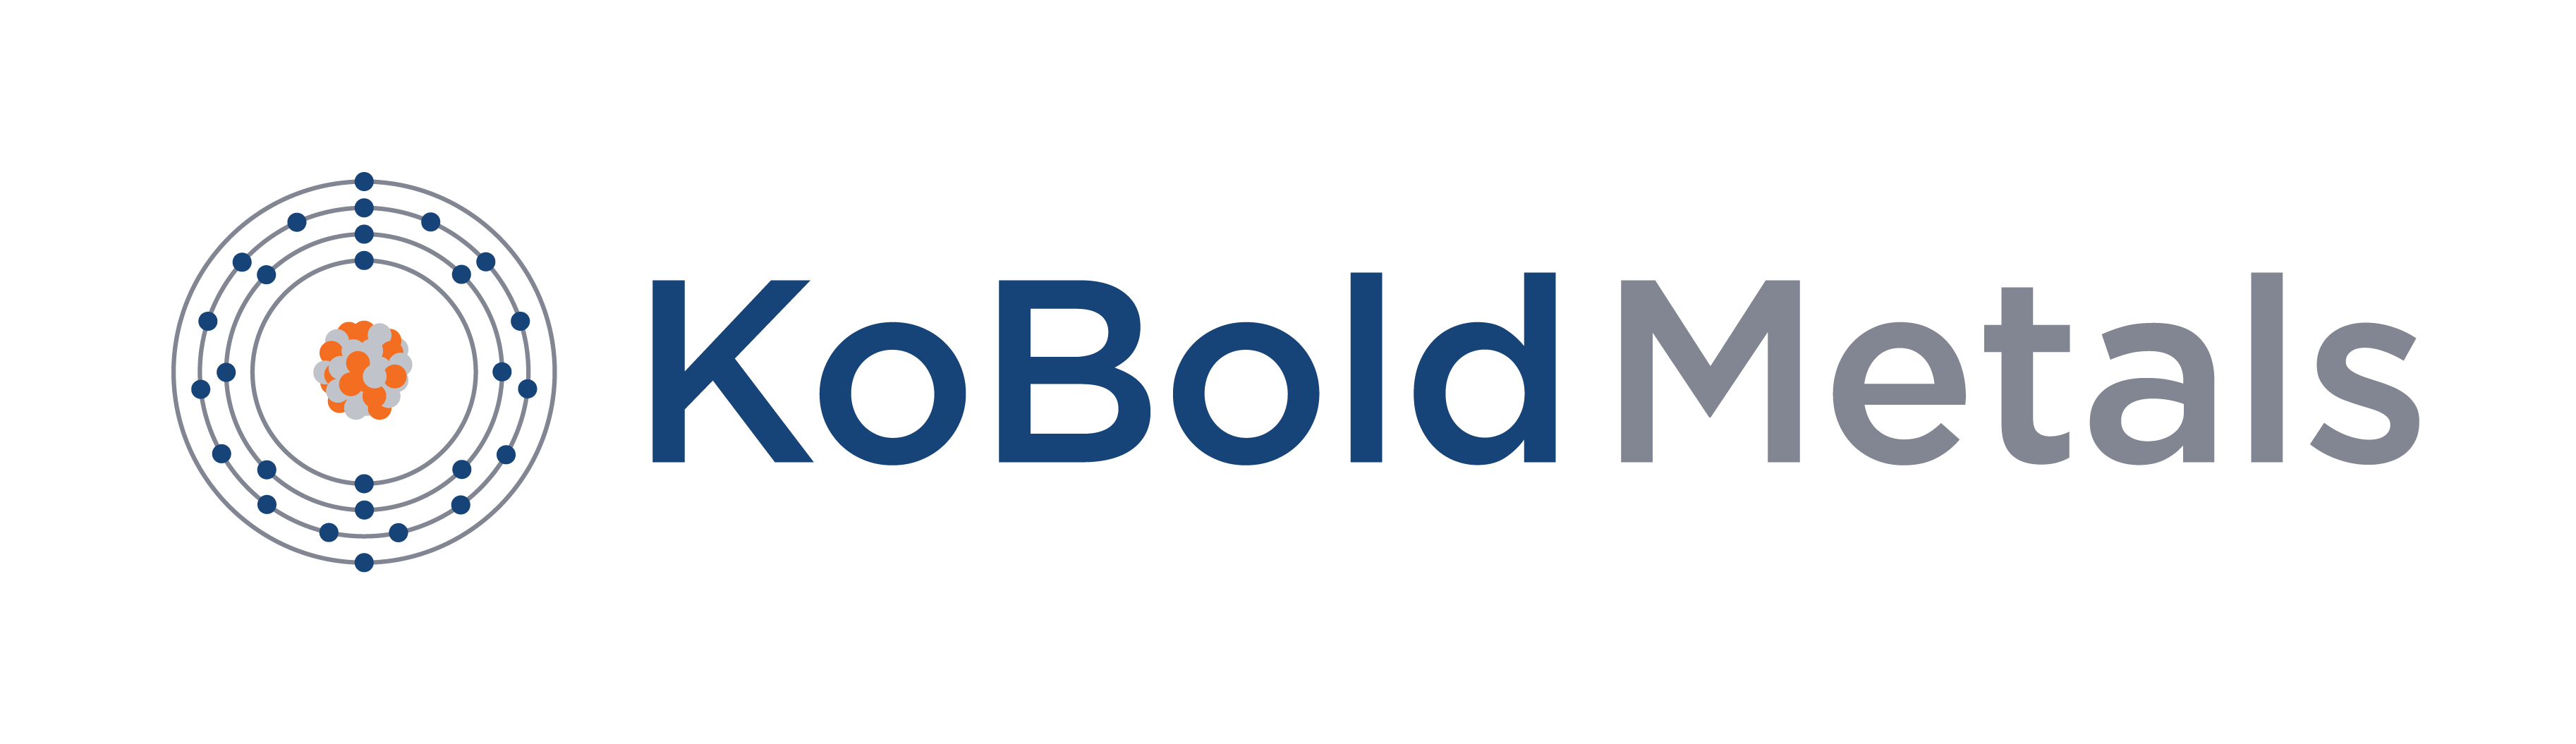 KoBold Metals grows global exploration footprint